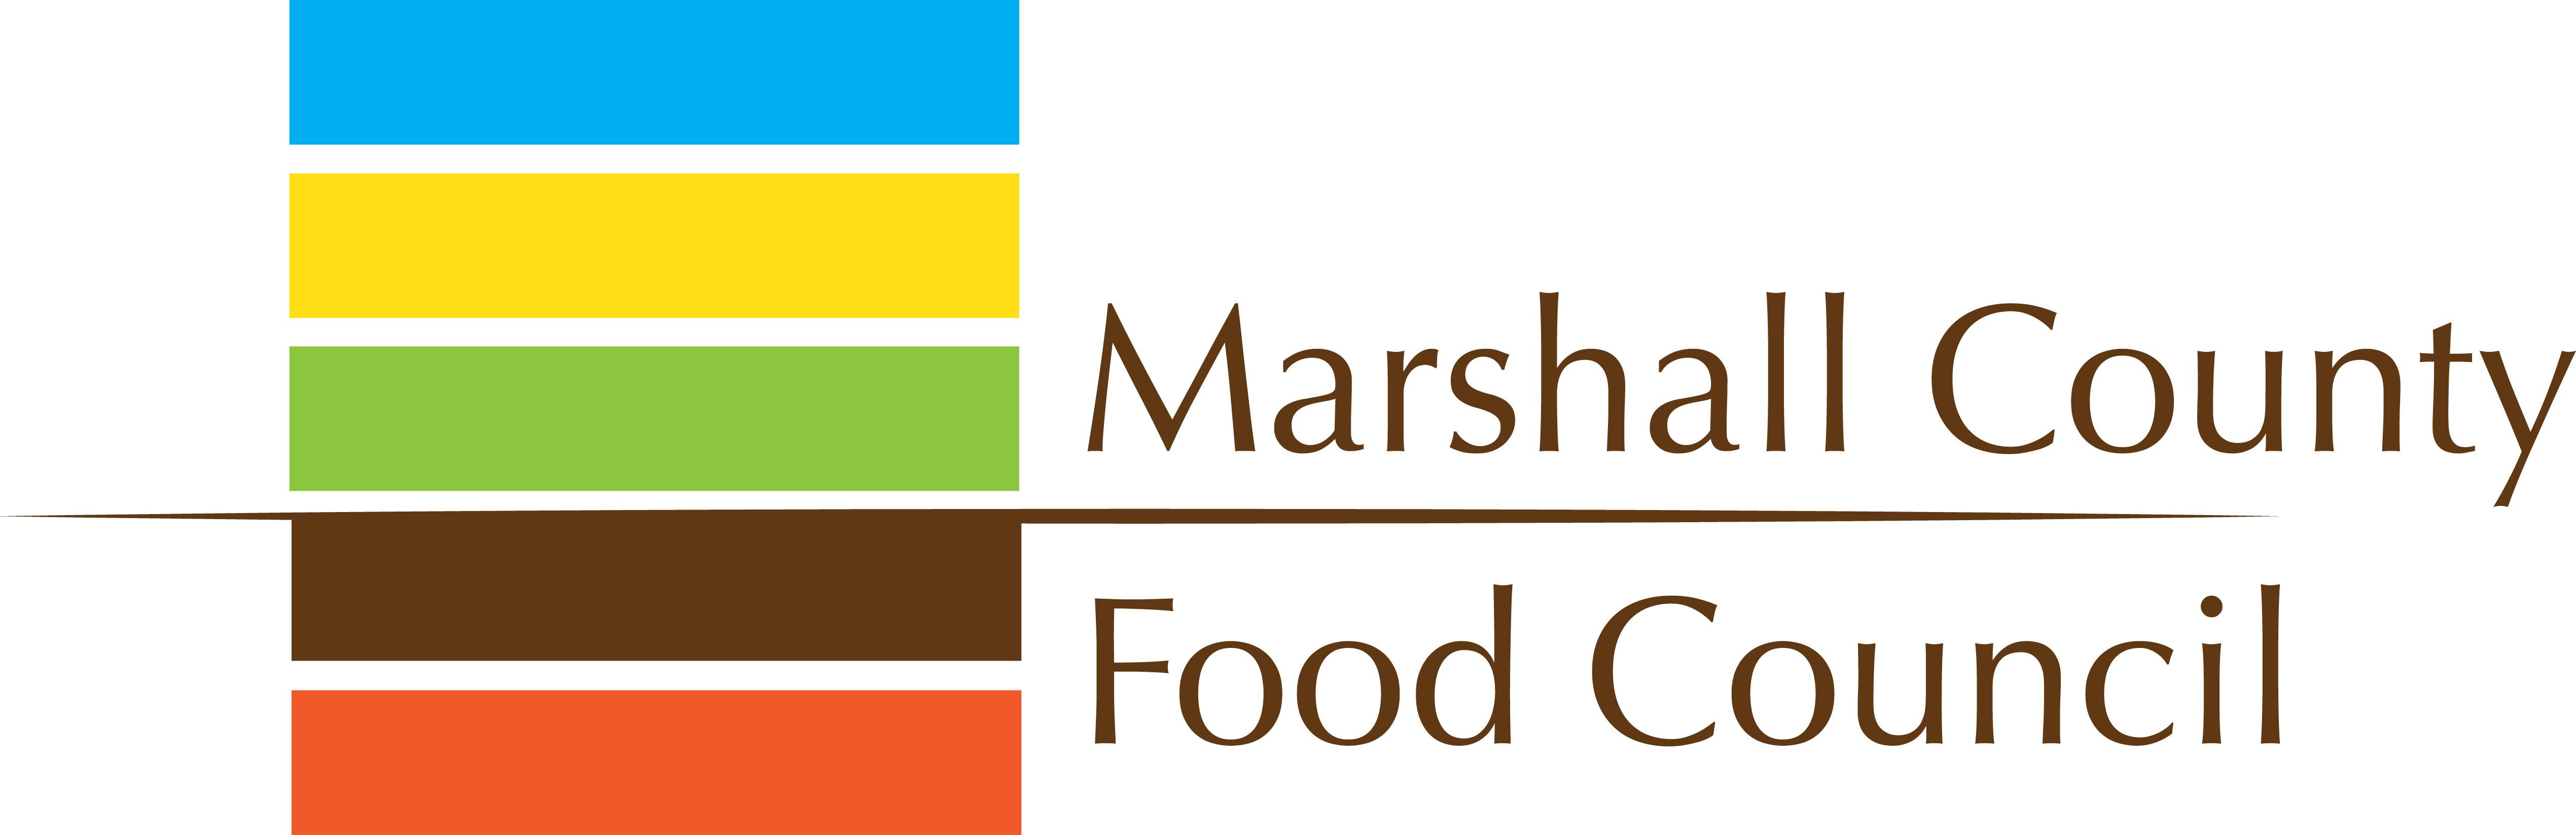 Marshall CFC Logo.jpg